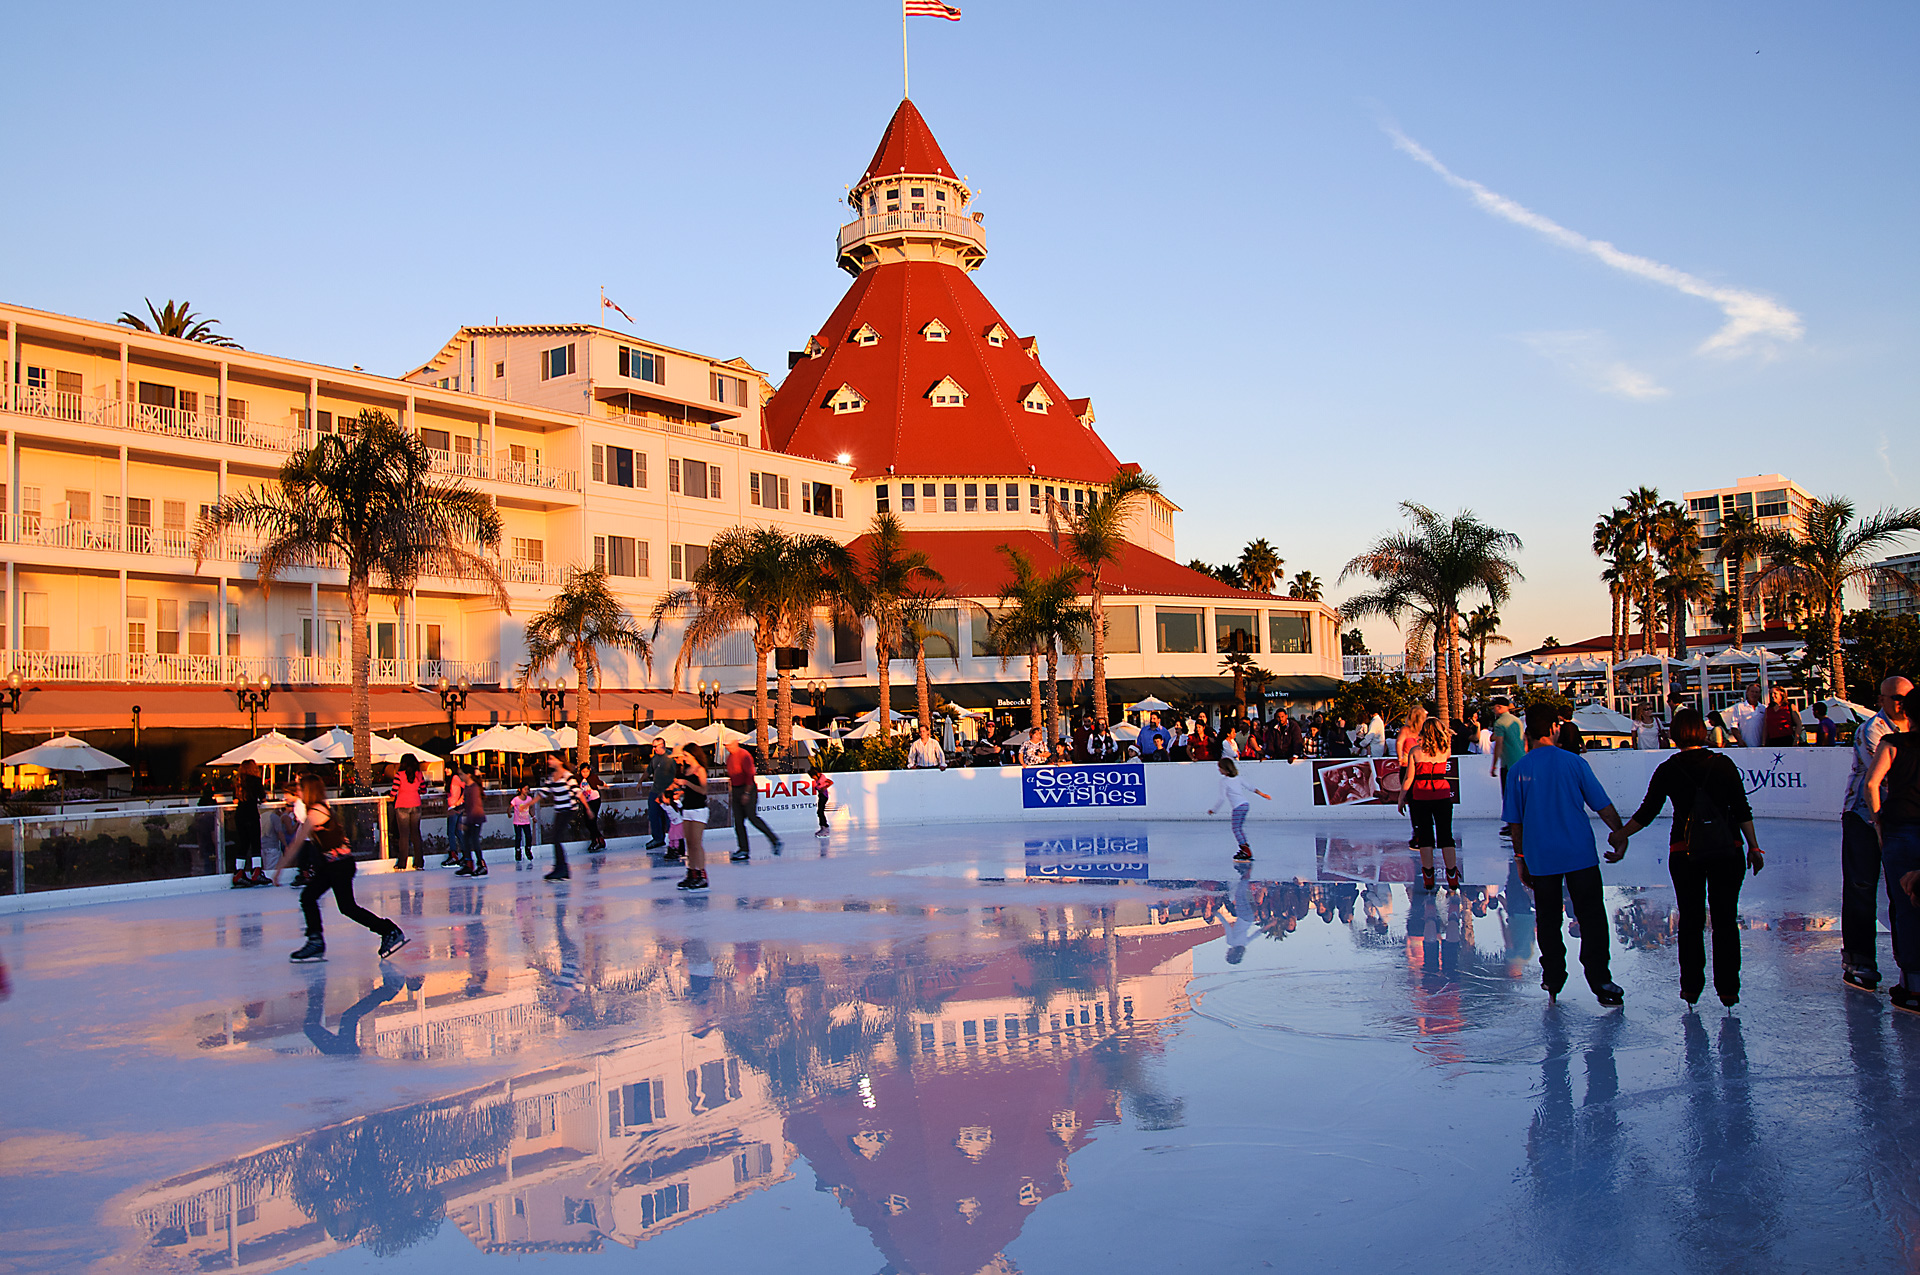 Ice skating at San Diego's Hotel del Coronado